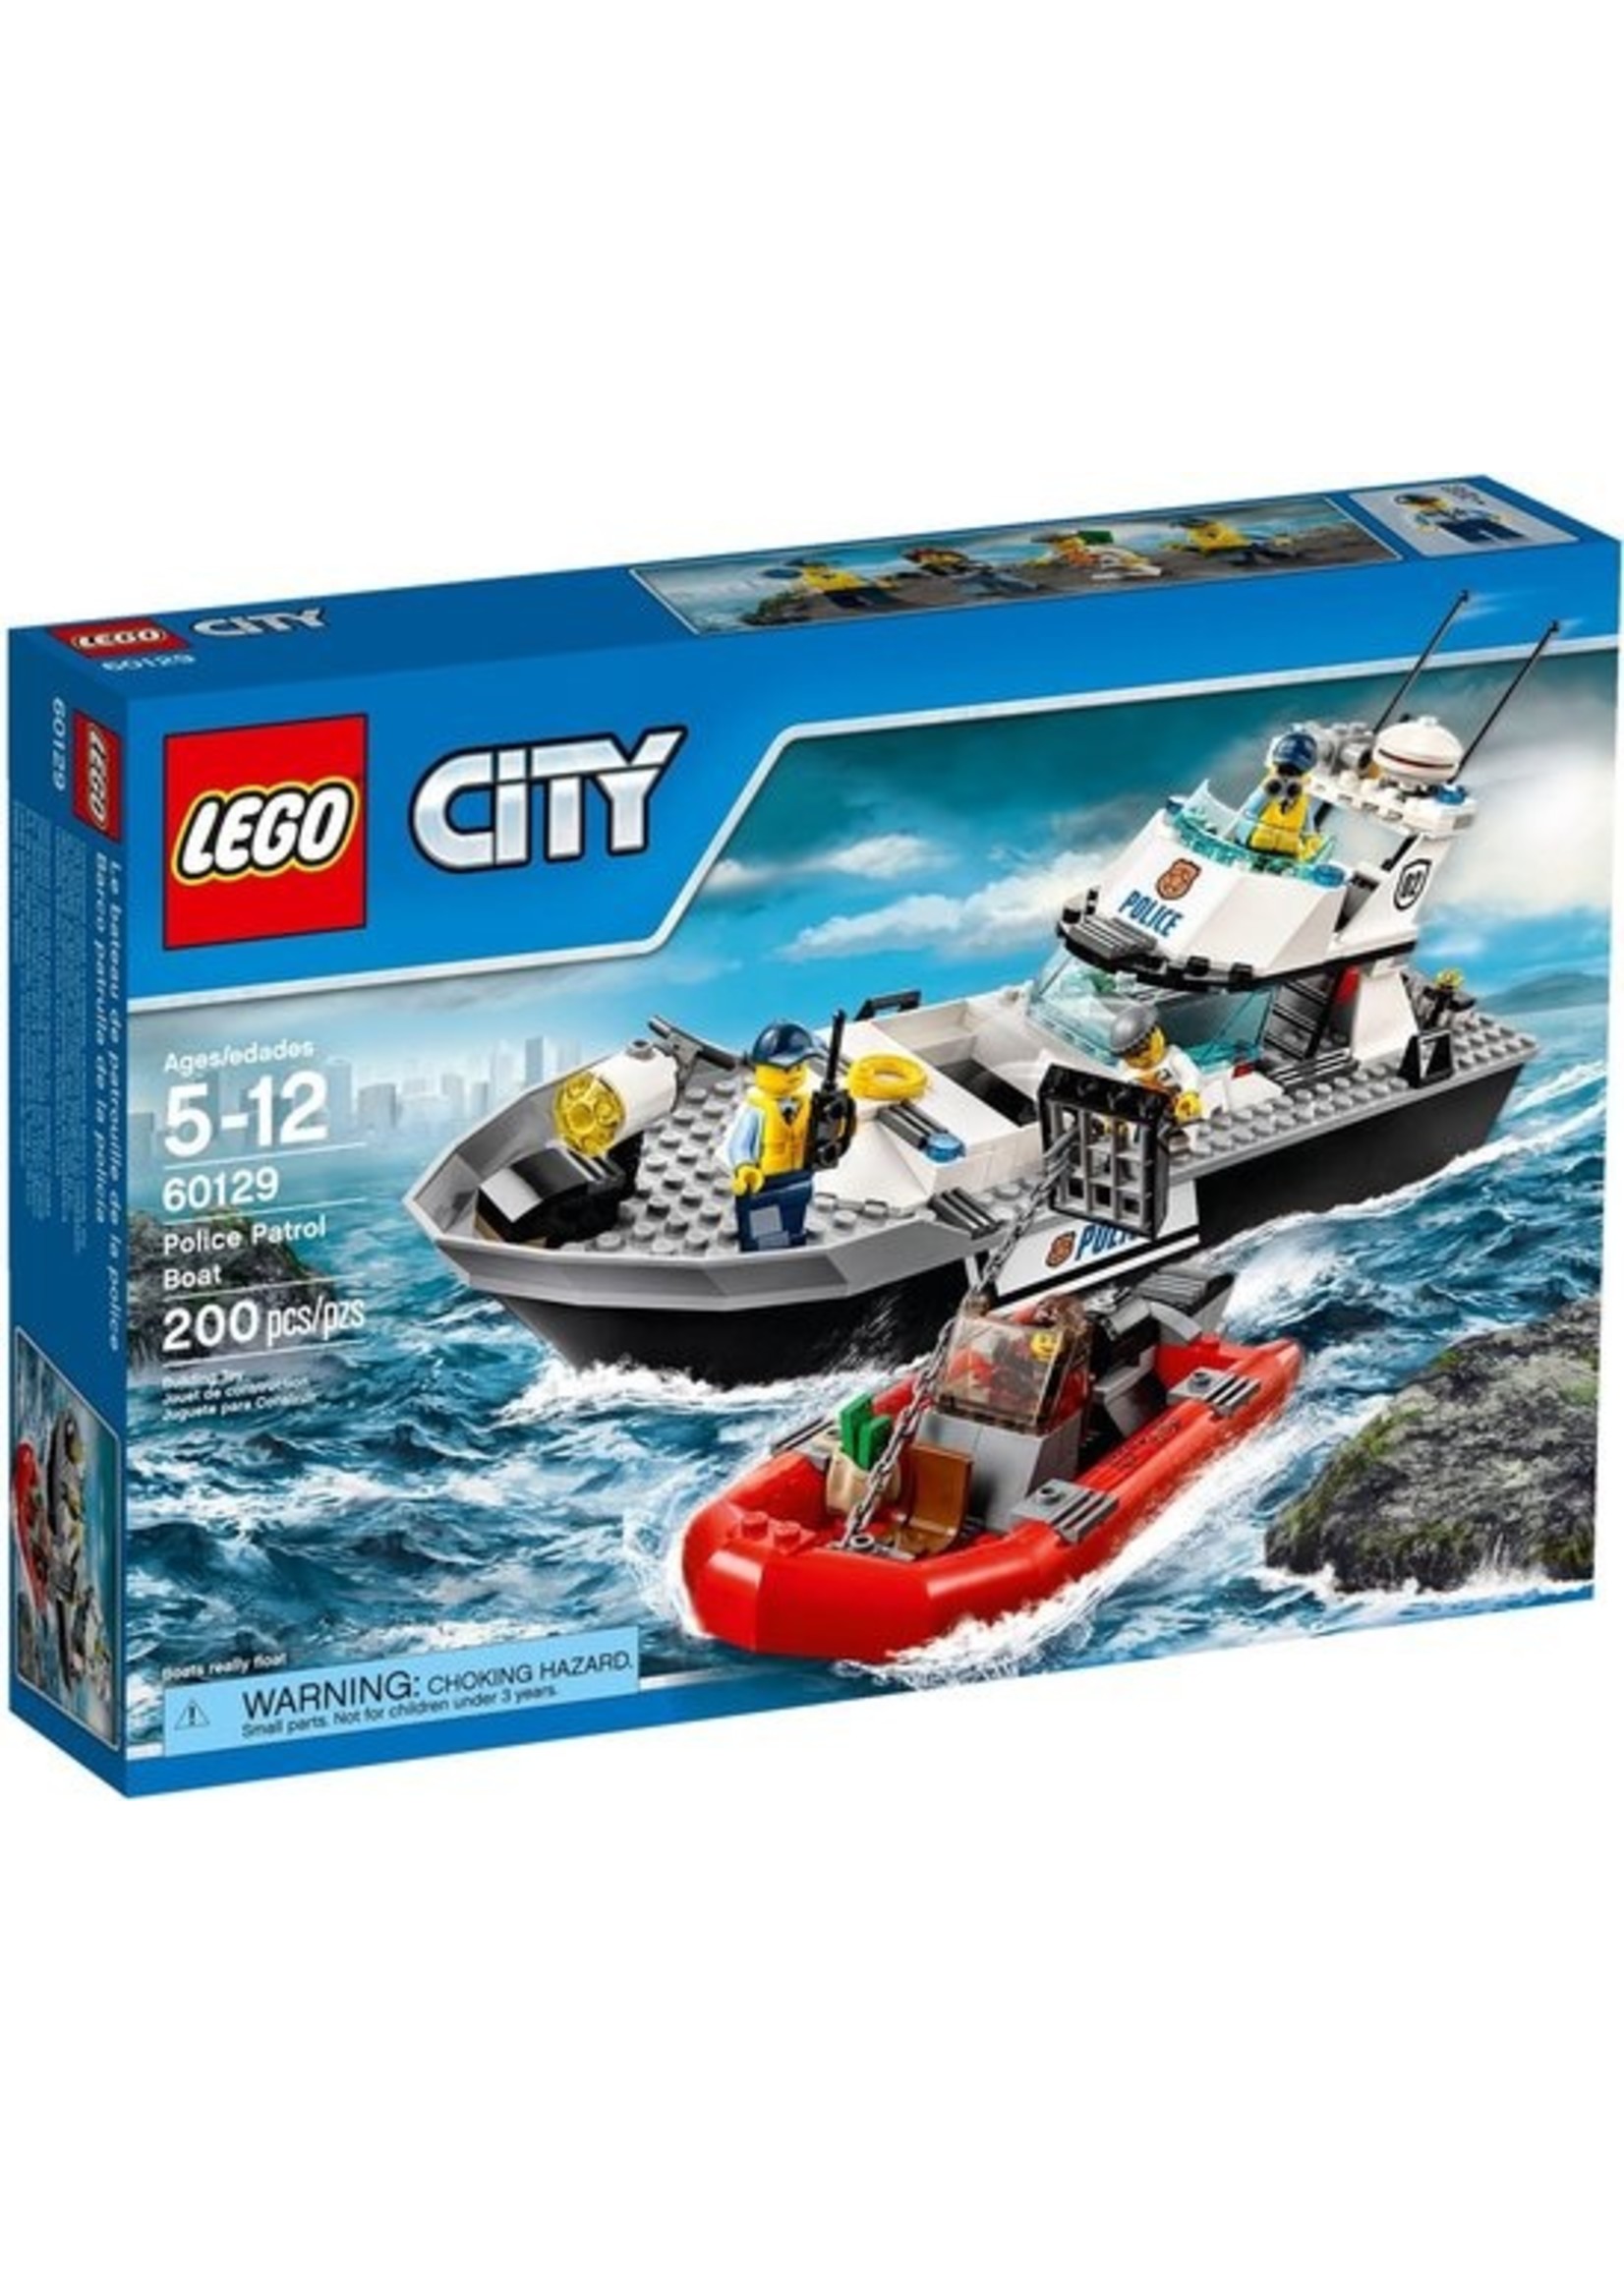 LEGO City Police Patrol Boat - 60129